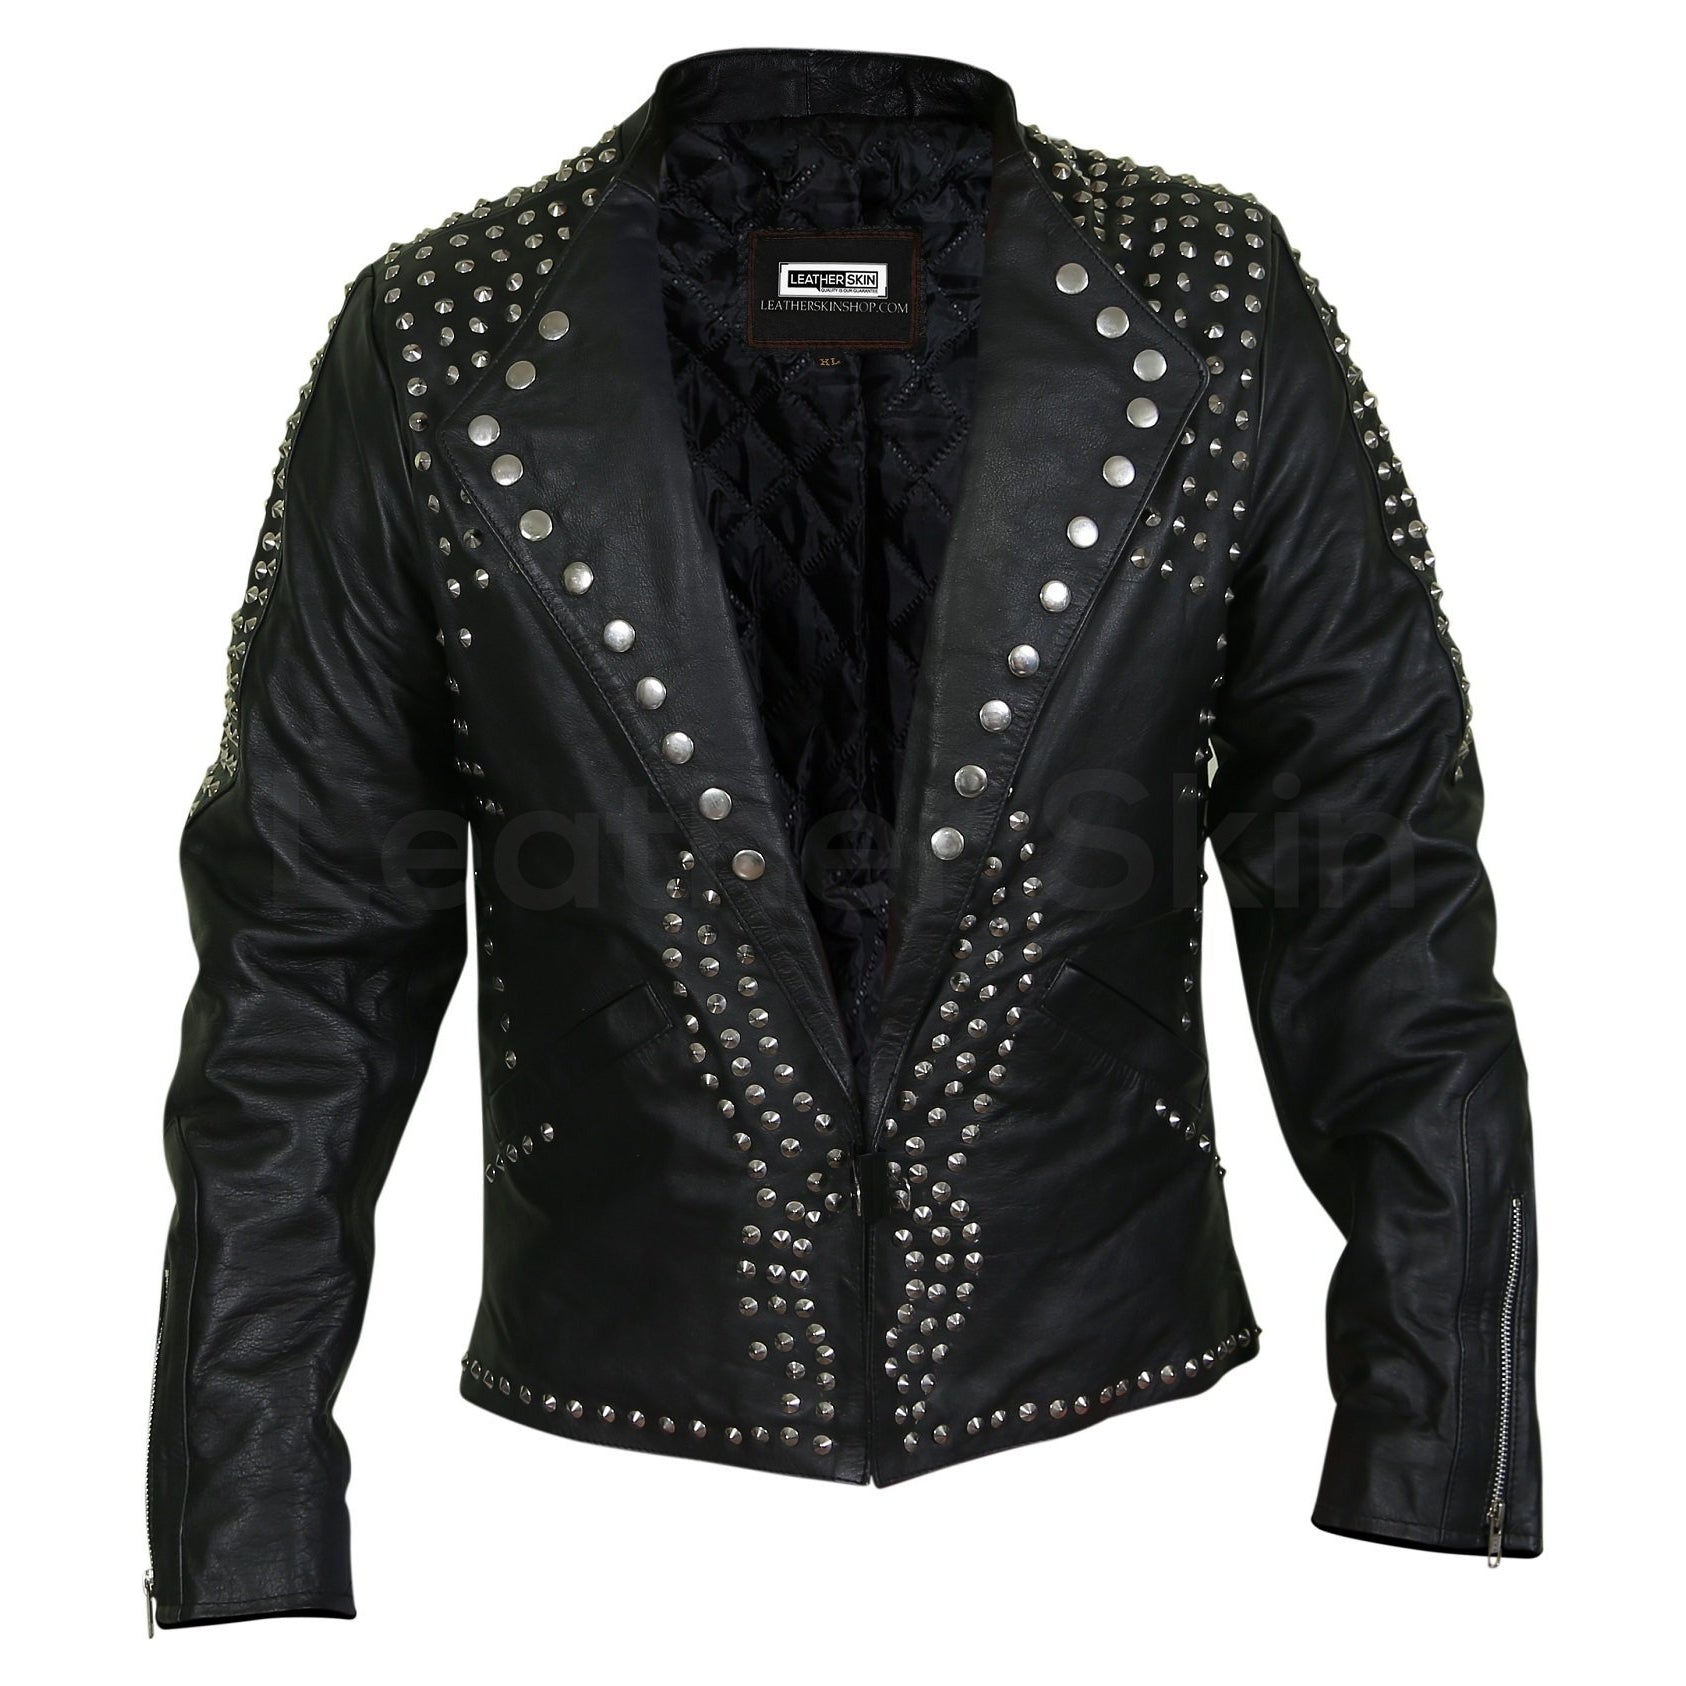 Mens Black Leather Jacket - Studded Spiked Studs Punk Asymmetrical